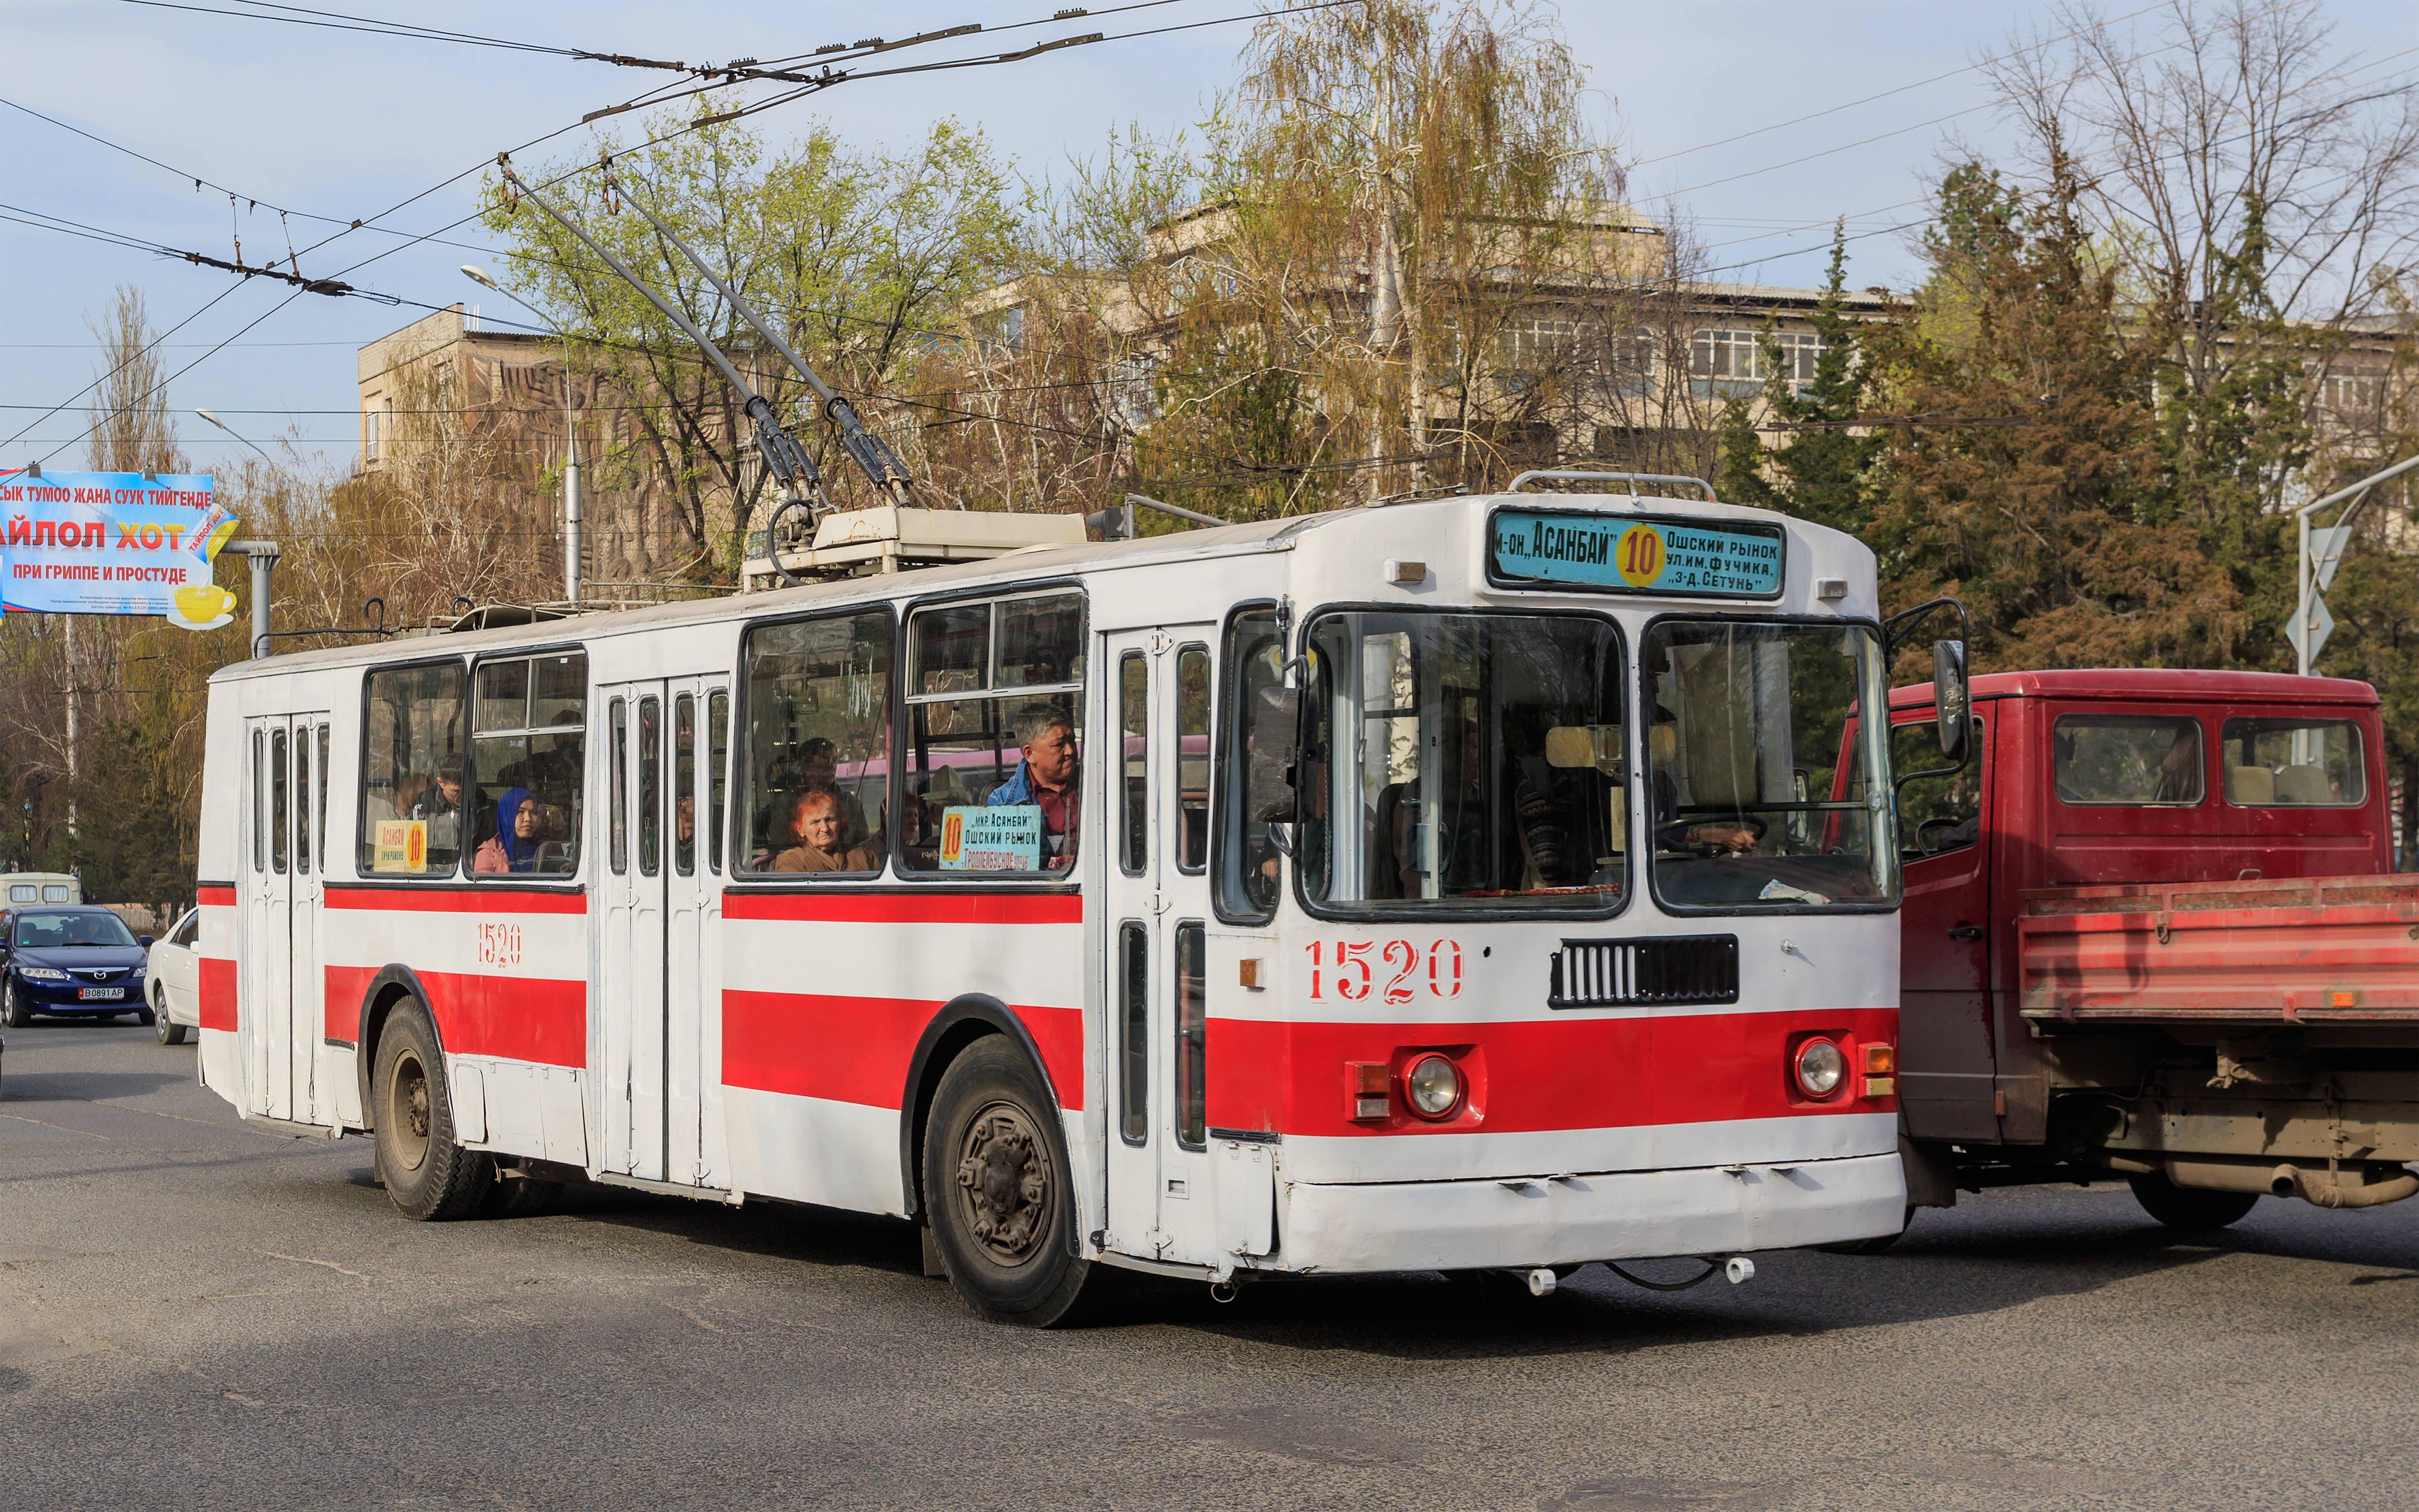 Bishkek 03-2016 img34 trolley near South Gate